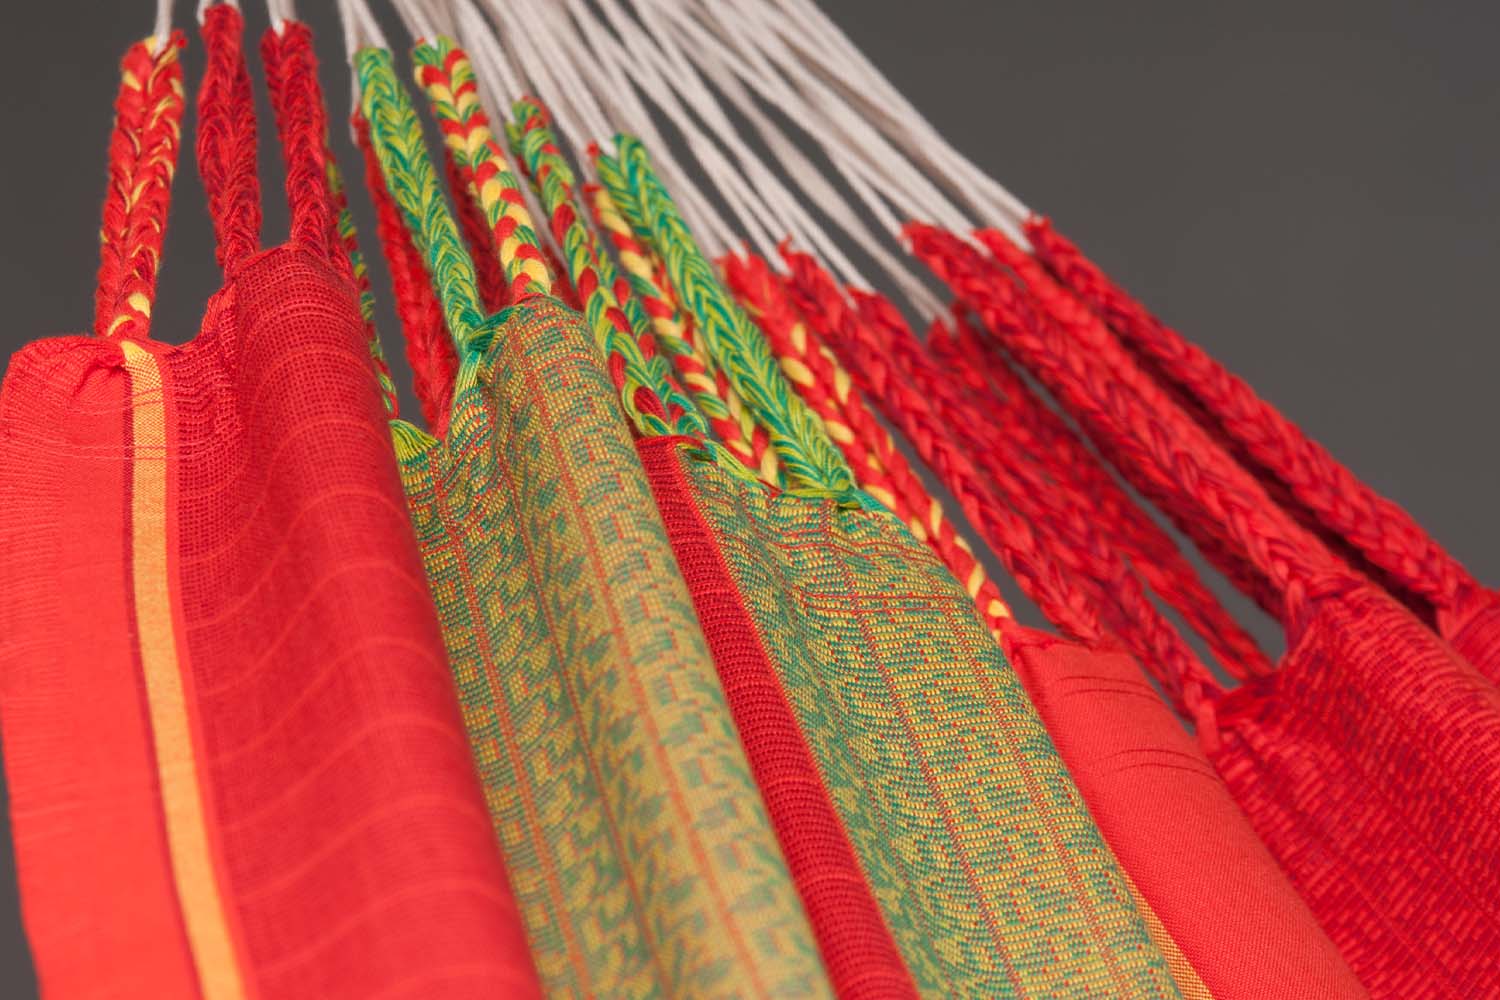 flora-chilli-family-xxl-eco-hammock-pure-organic-cotton-handmade-red-orange-green-patterns-textile-detail